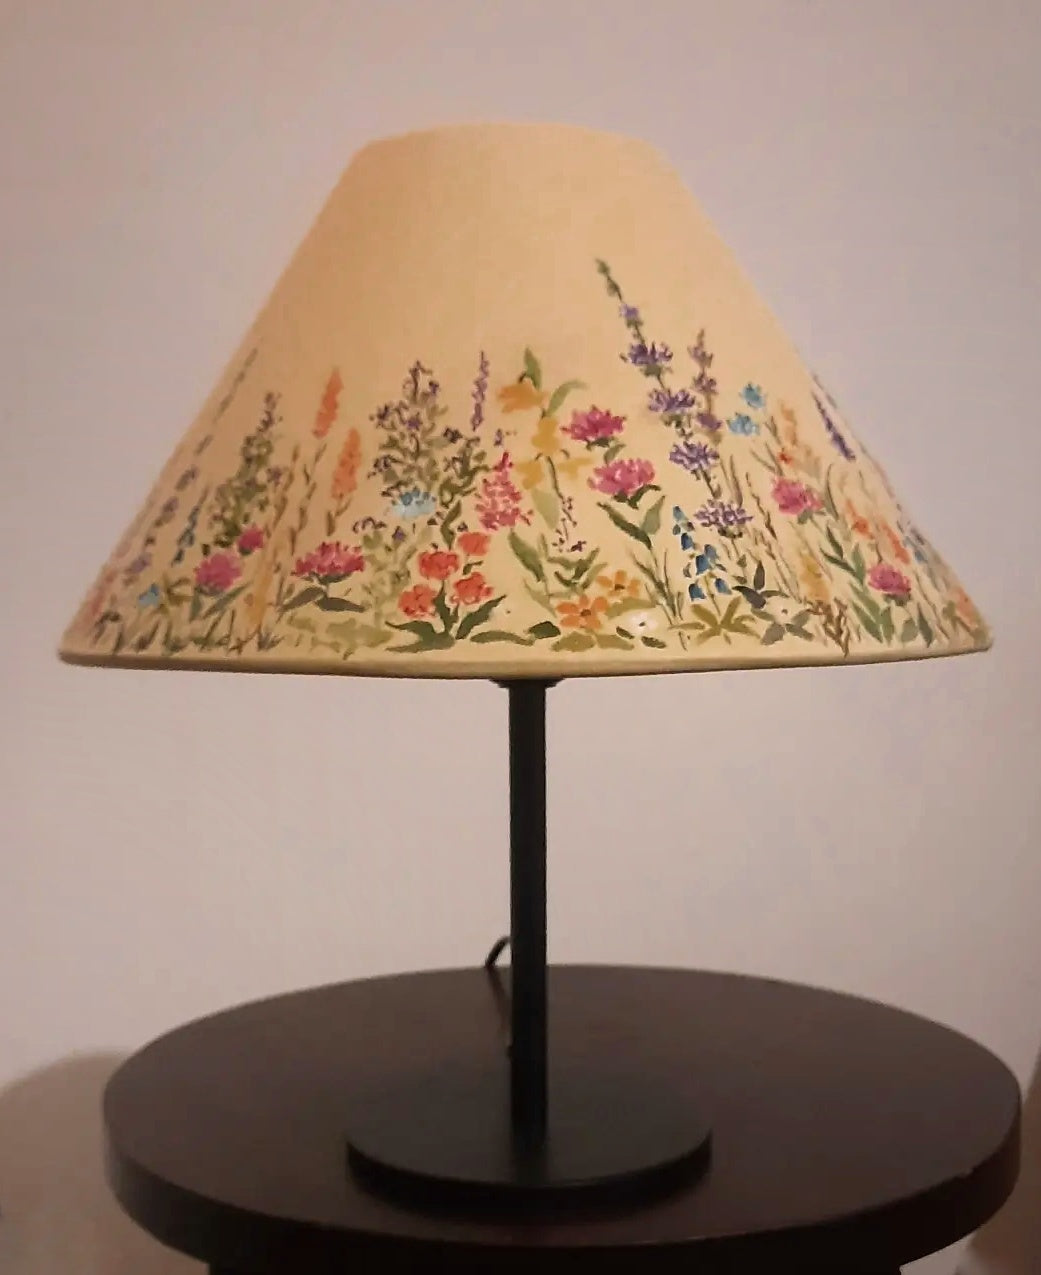 hand-drawn artistic table lamp by navavihan